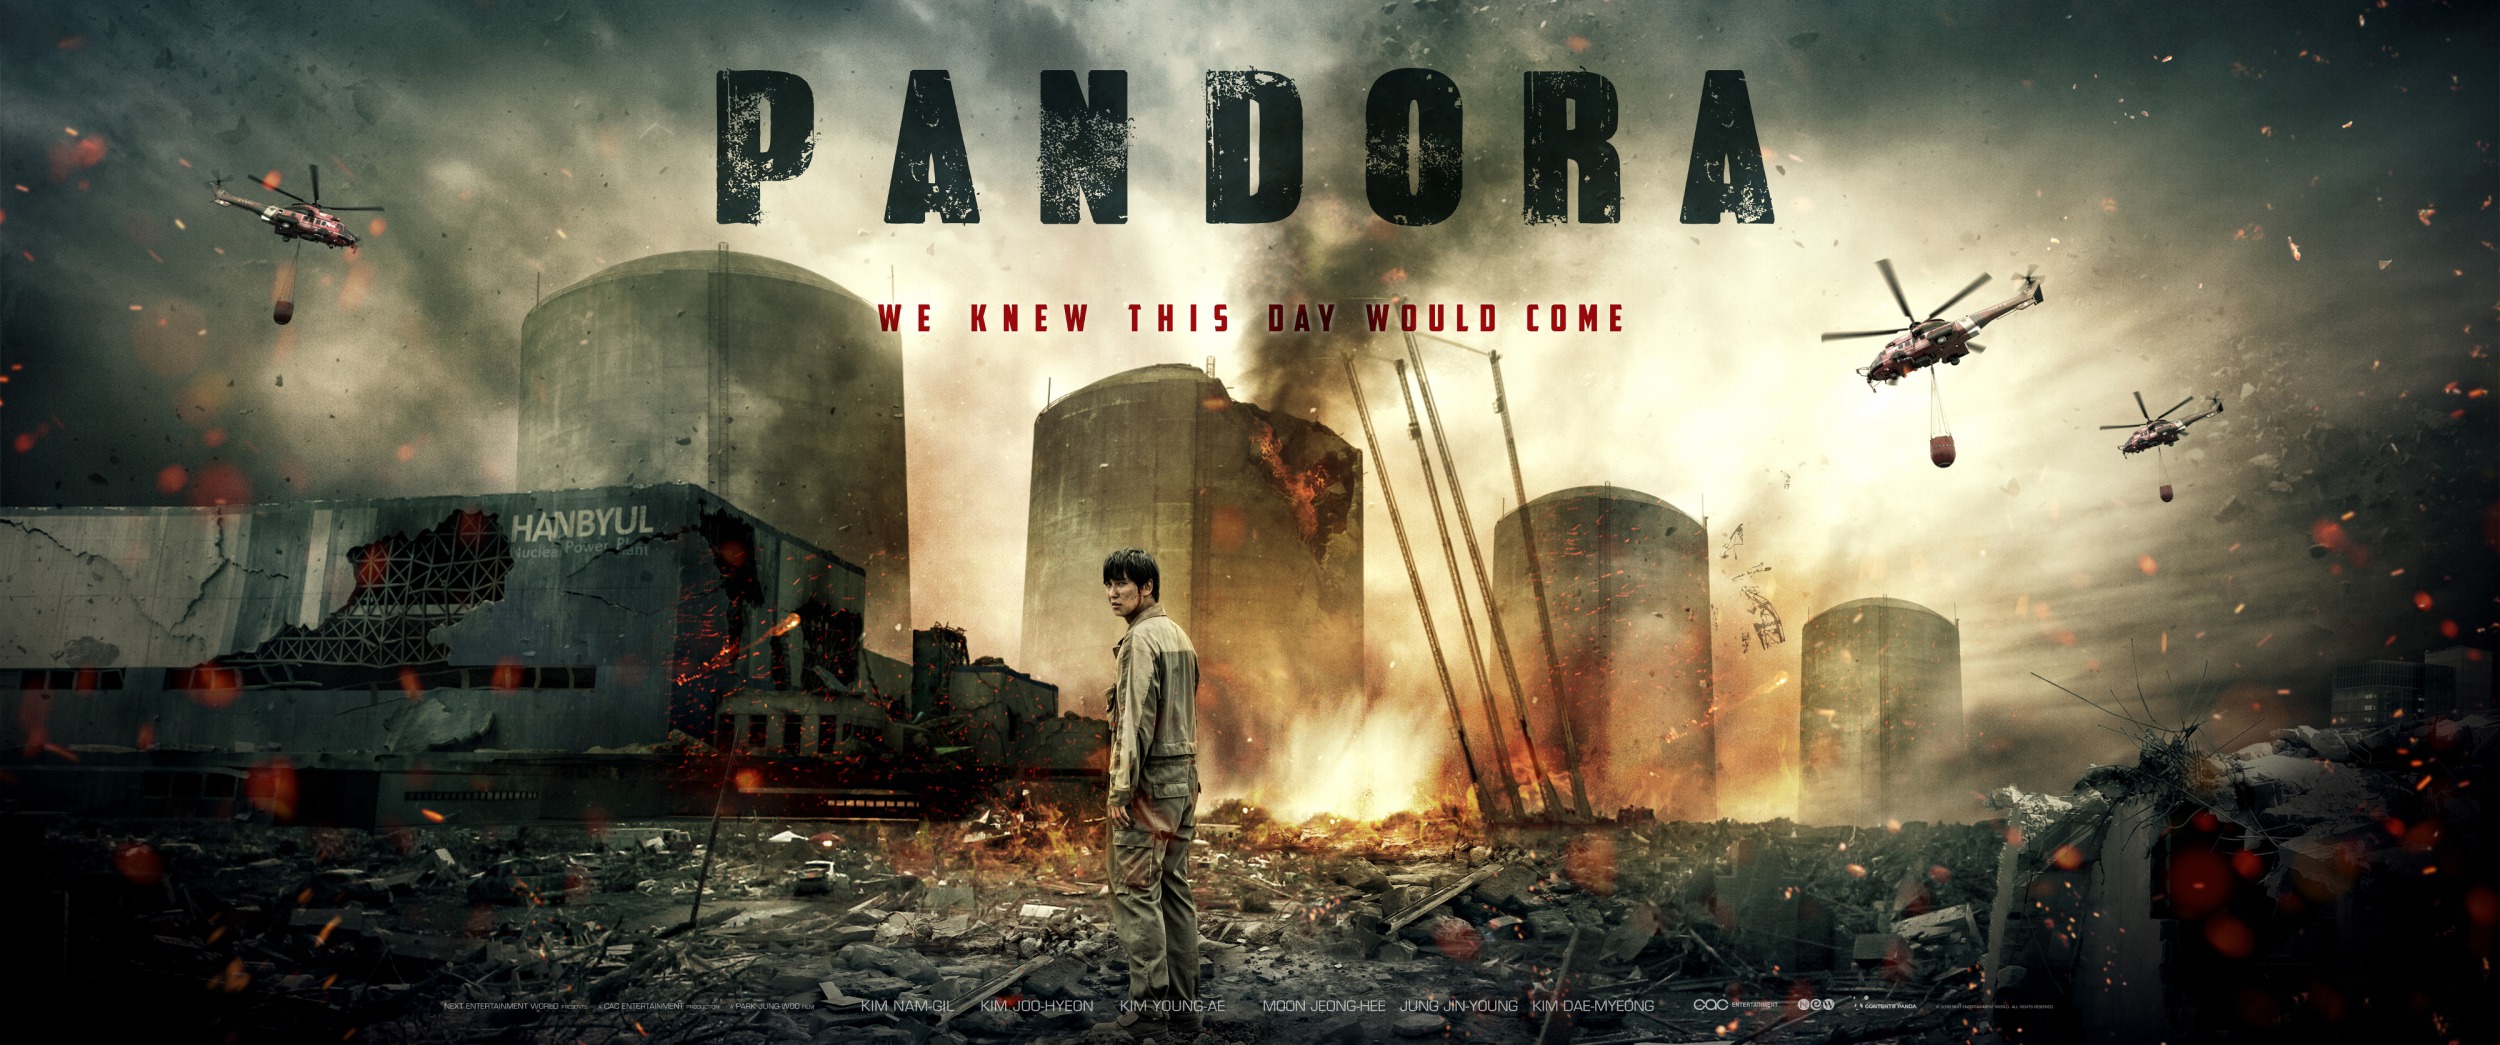 Mega Sized Movie Poster Image for Pandora (#2 of 2)